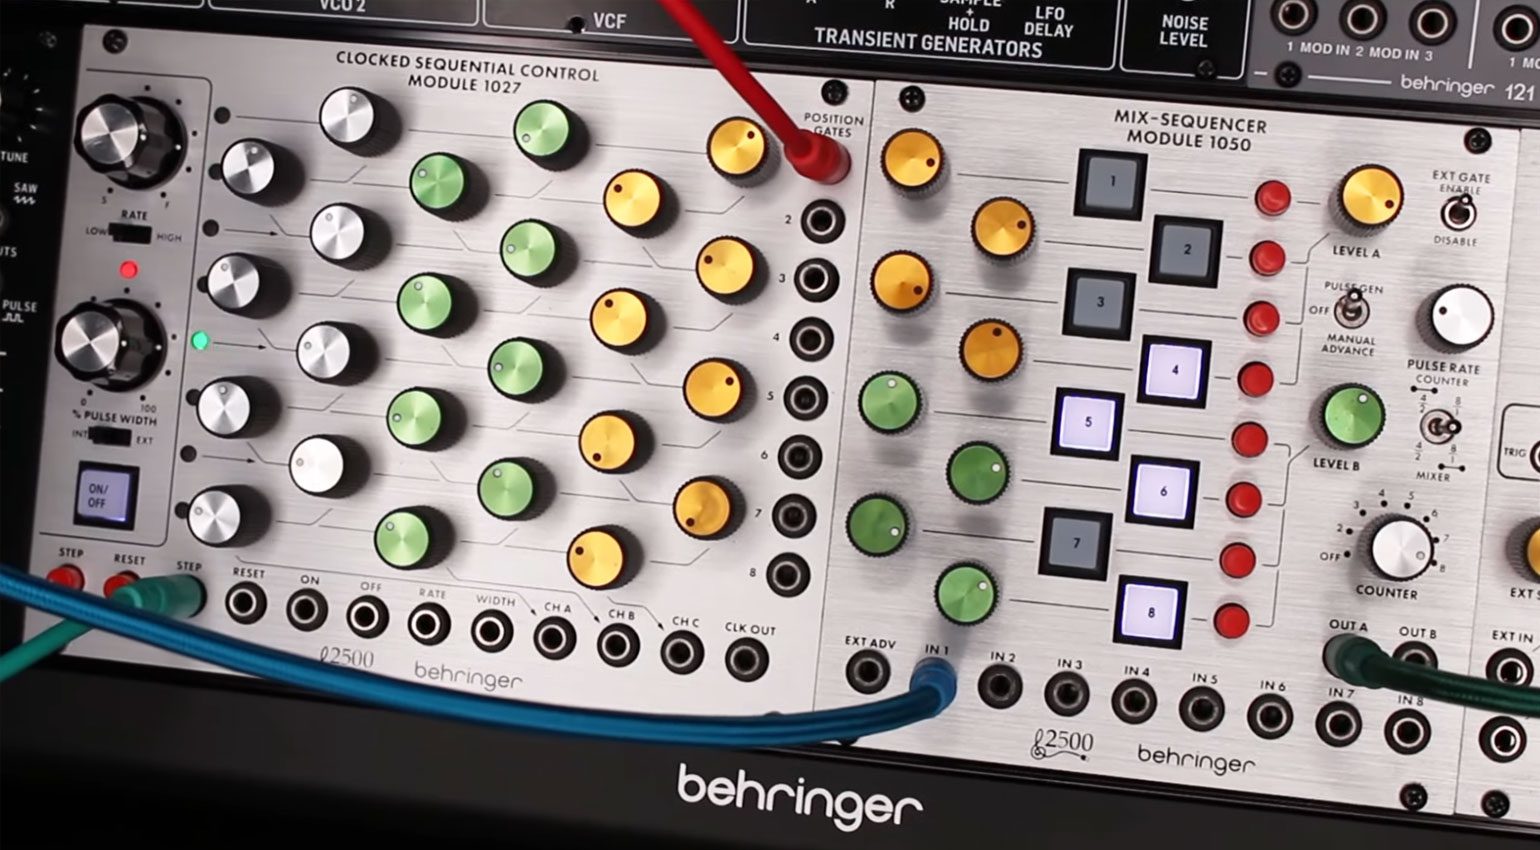 Behringer Mix-Sequencer Module 1050